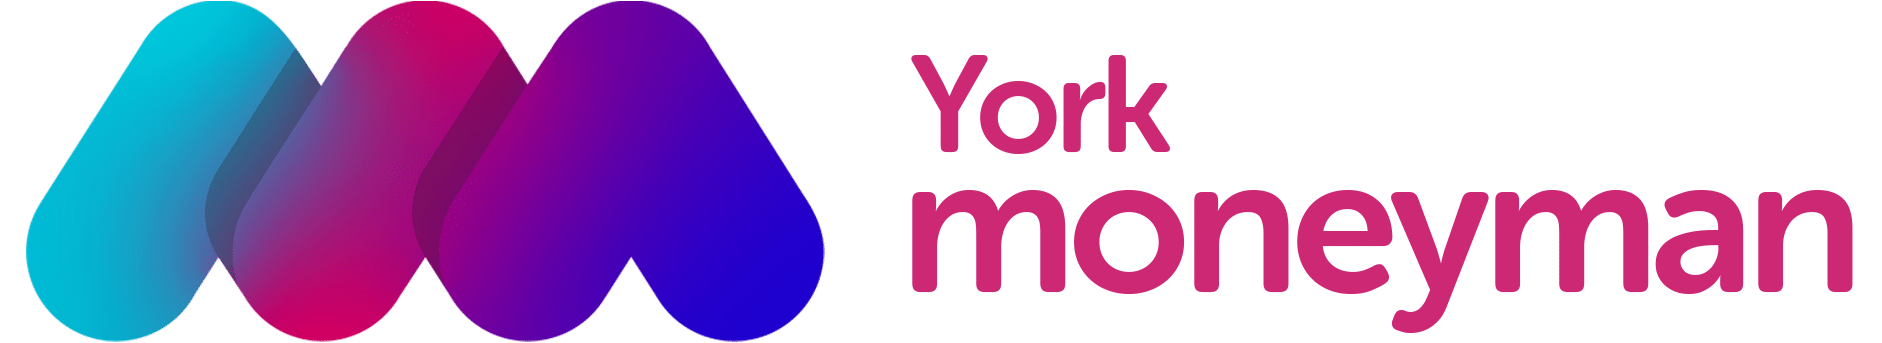 Mortgage Broker in York - Yorkmoneyman